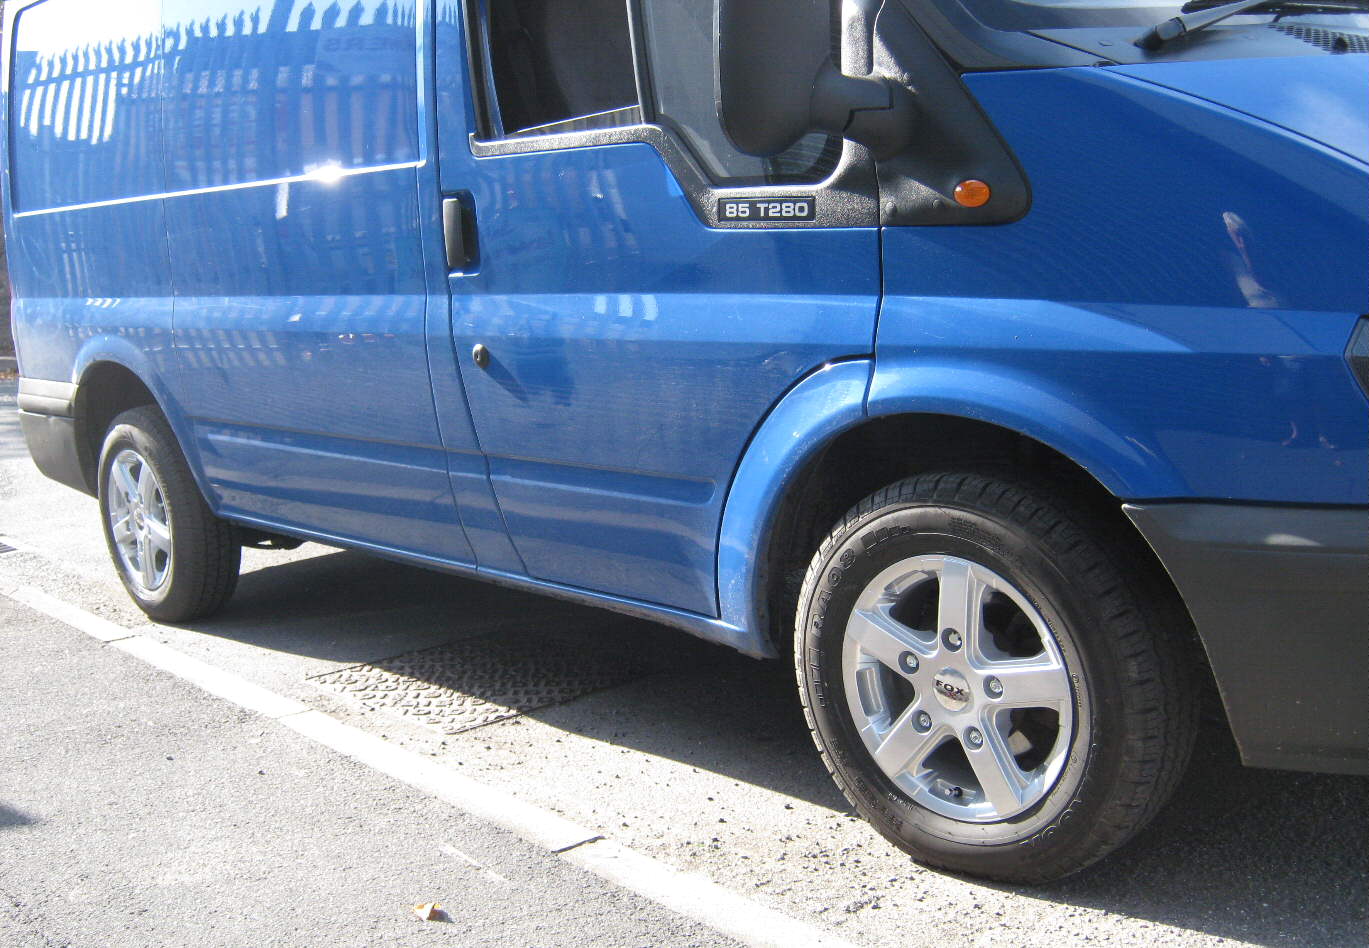 15" Viper Alloy Wheels on Ford Transit